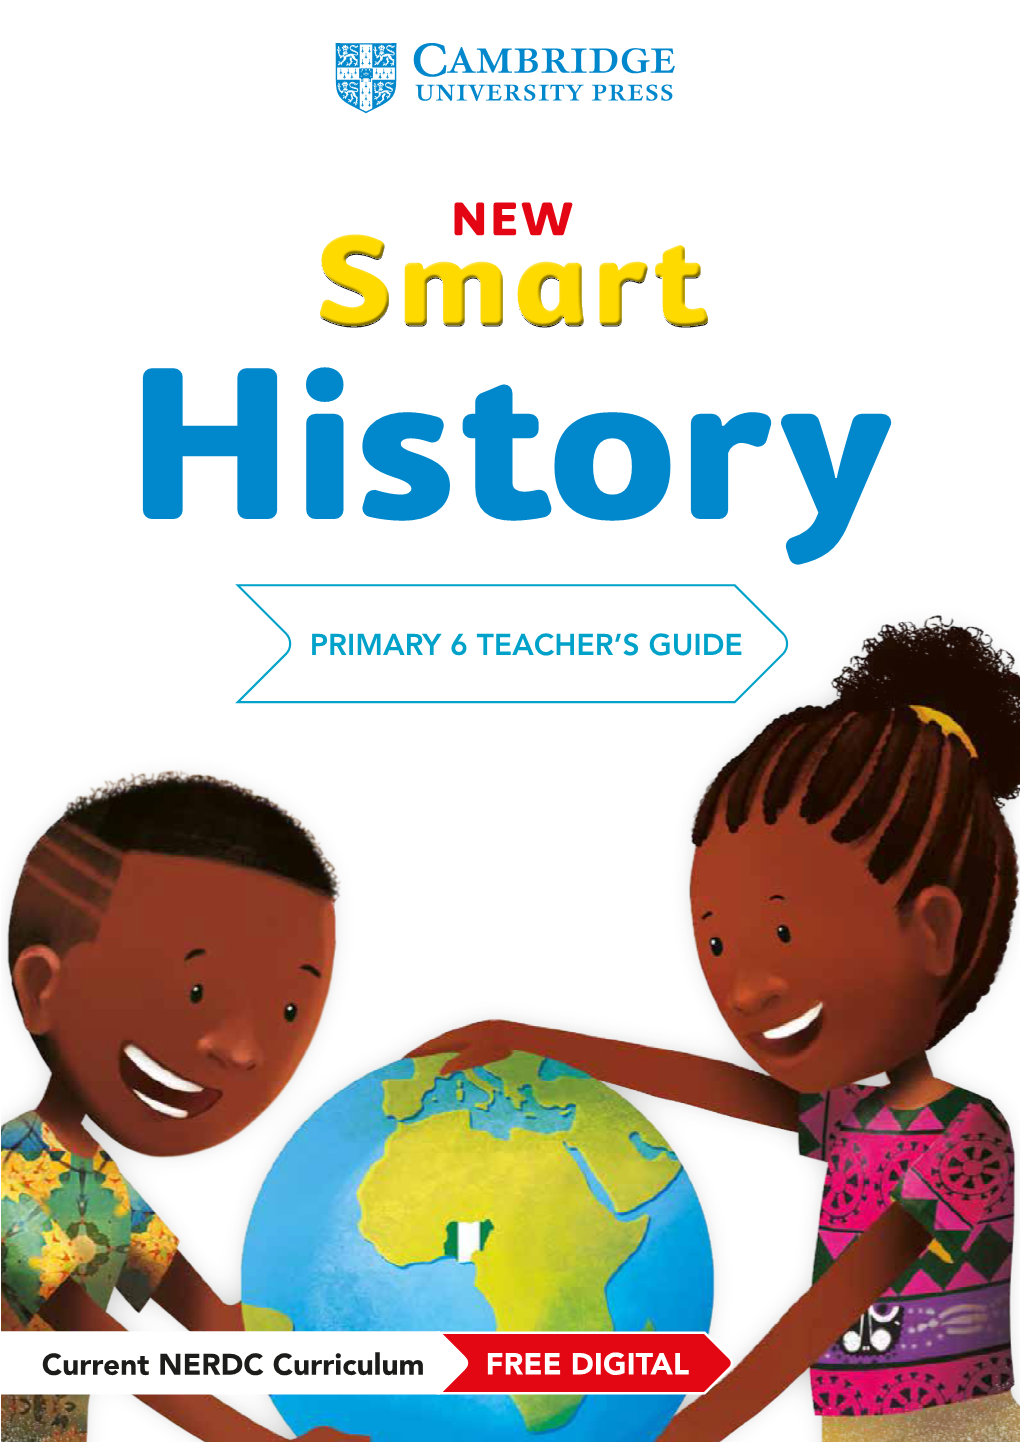 New Smart History Primary 6 Teacher's Guide